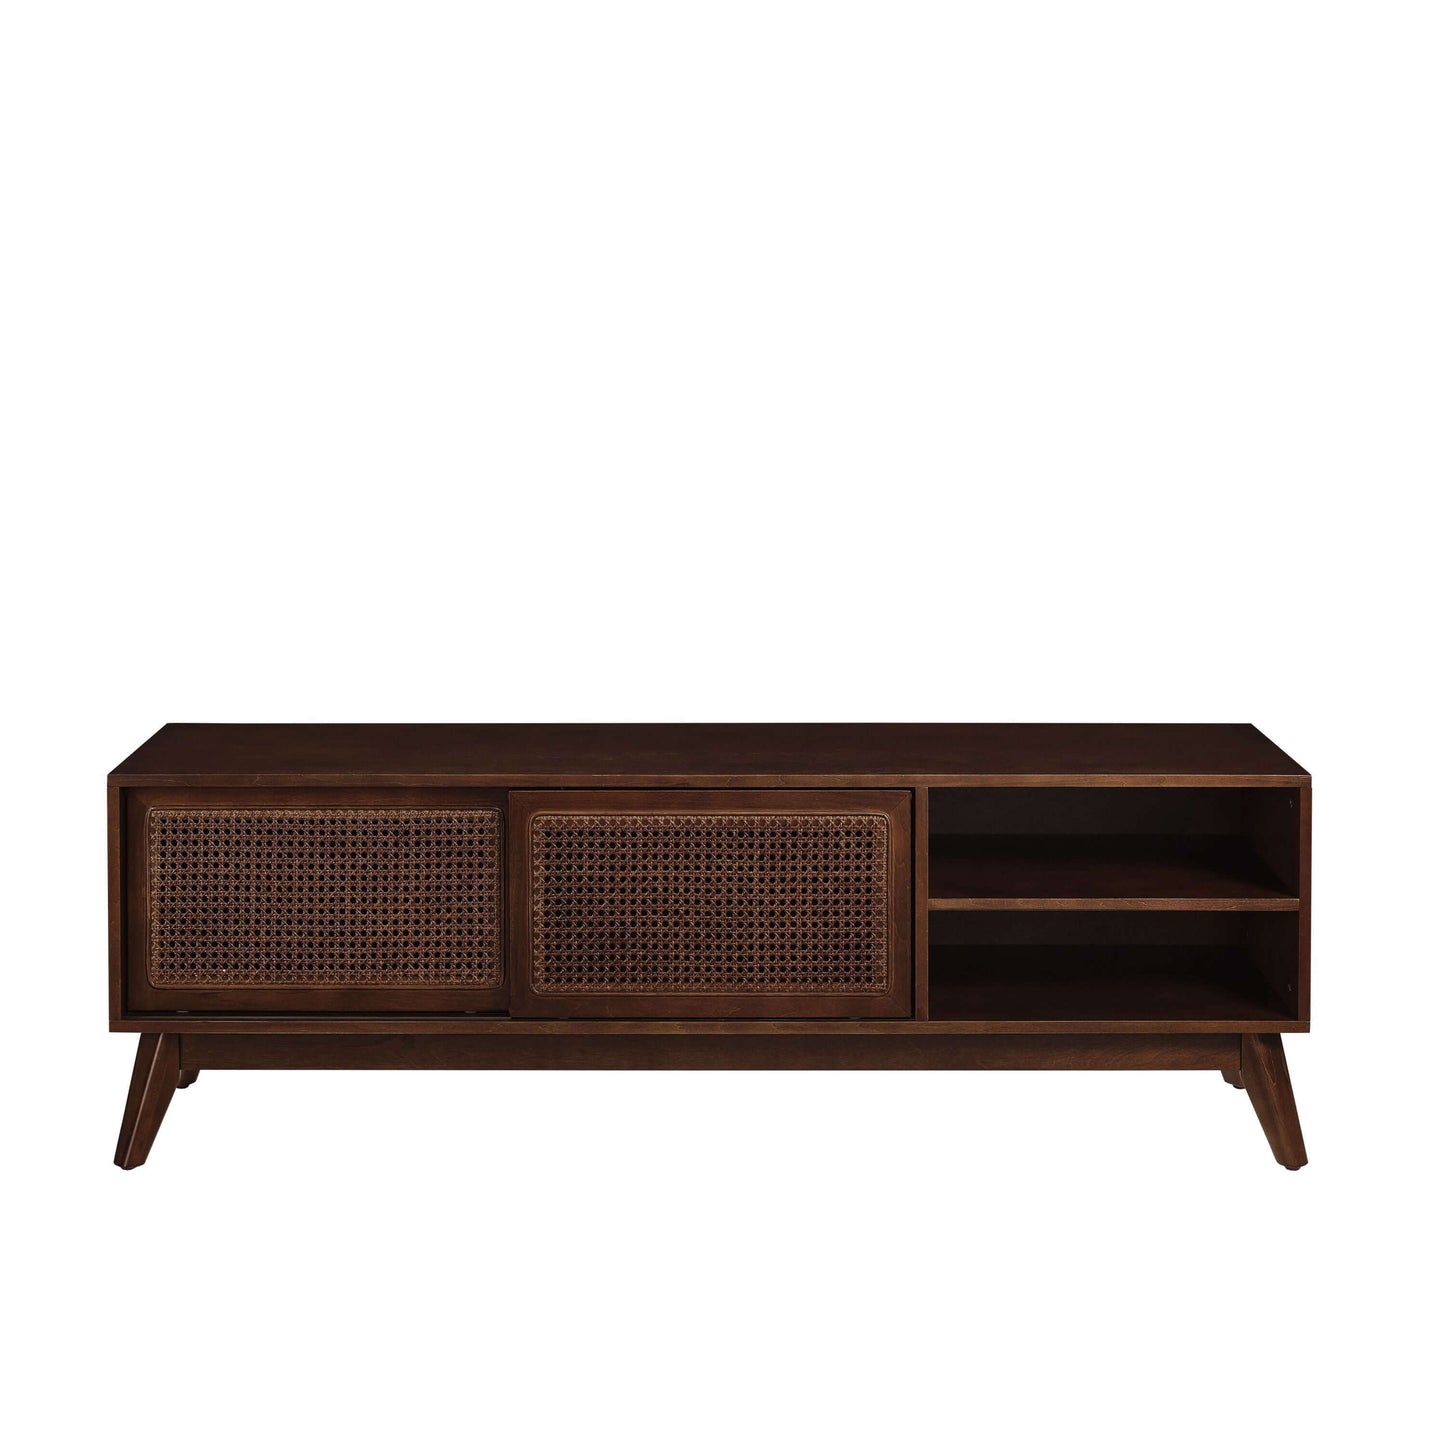 MCM Styled Wood TV Stand Rattan Cabinet Doors, Dark Stain 59" - Revel Sofa 